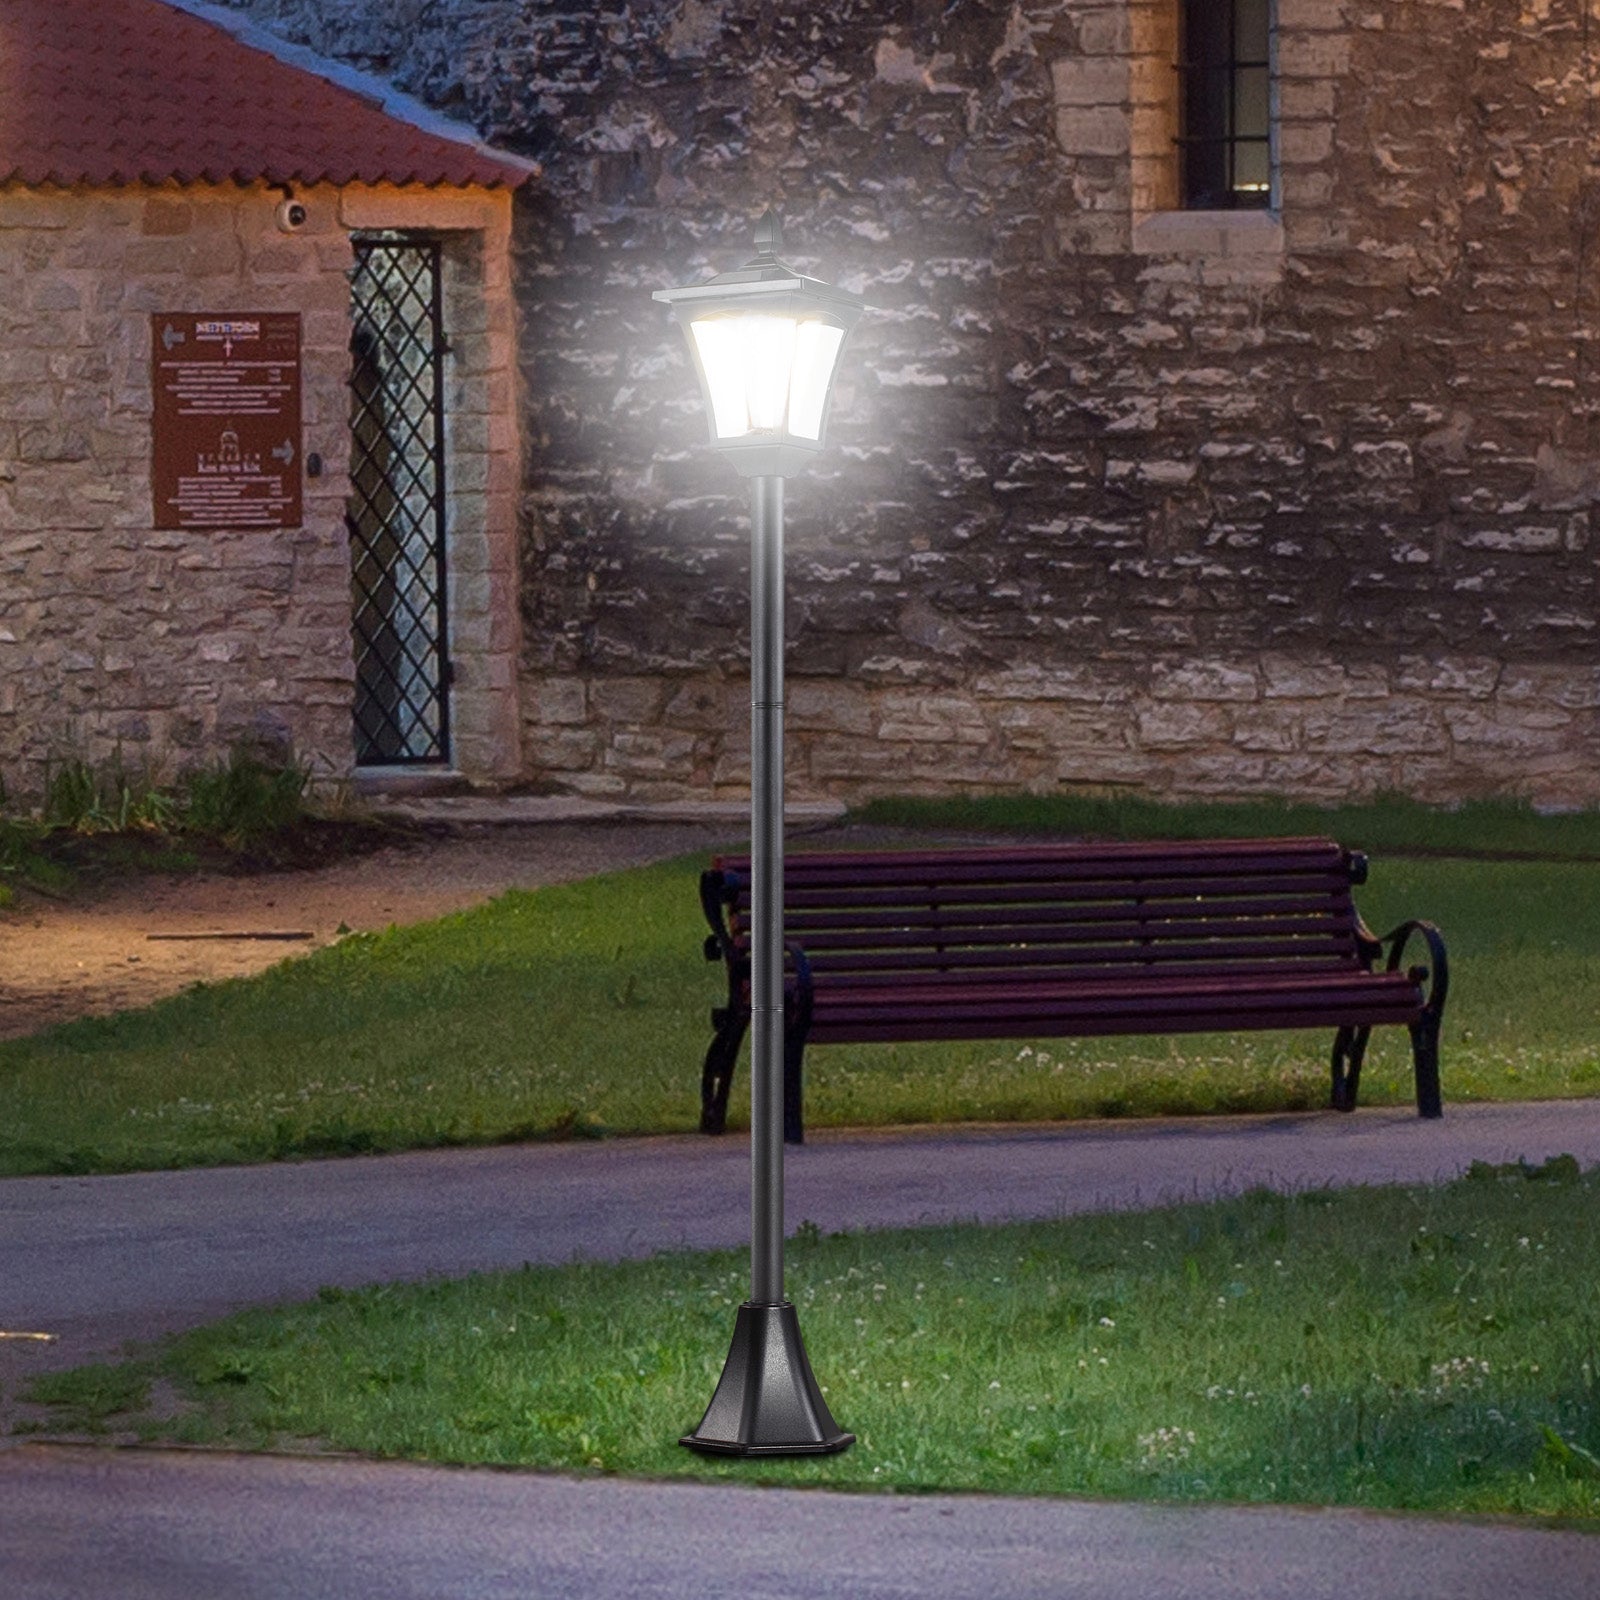 Outdoor Garden Solar Post Lamp, Light Sensor Dimmable LED Lantern Bollard Pathway 63" Tall, Black at Gallery Canada